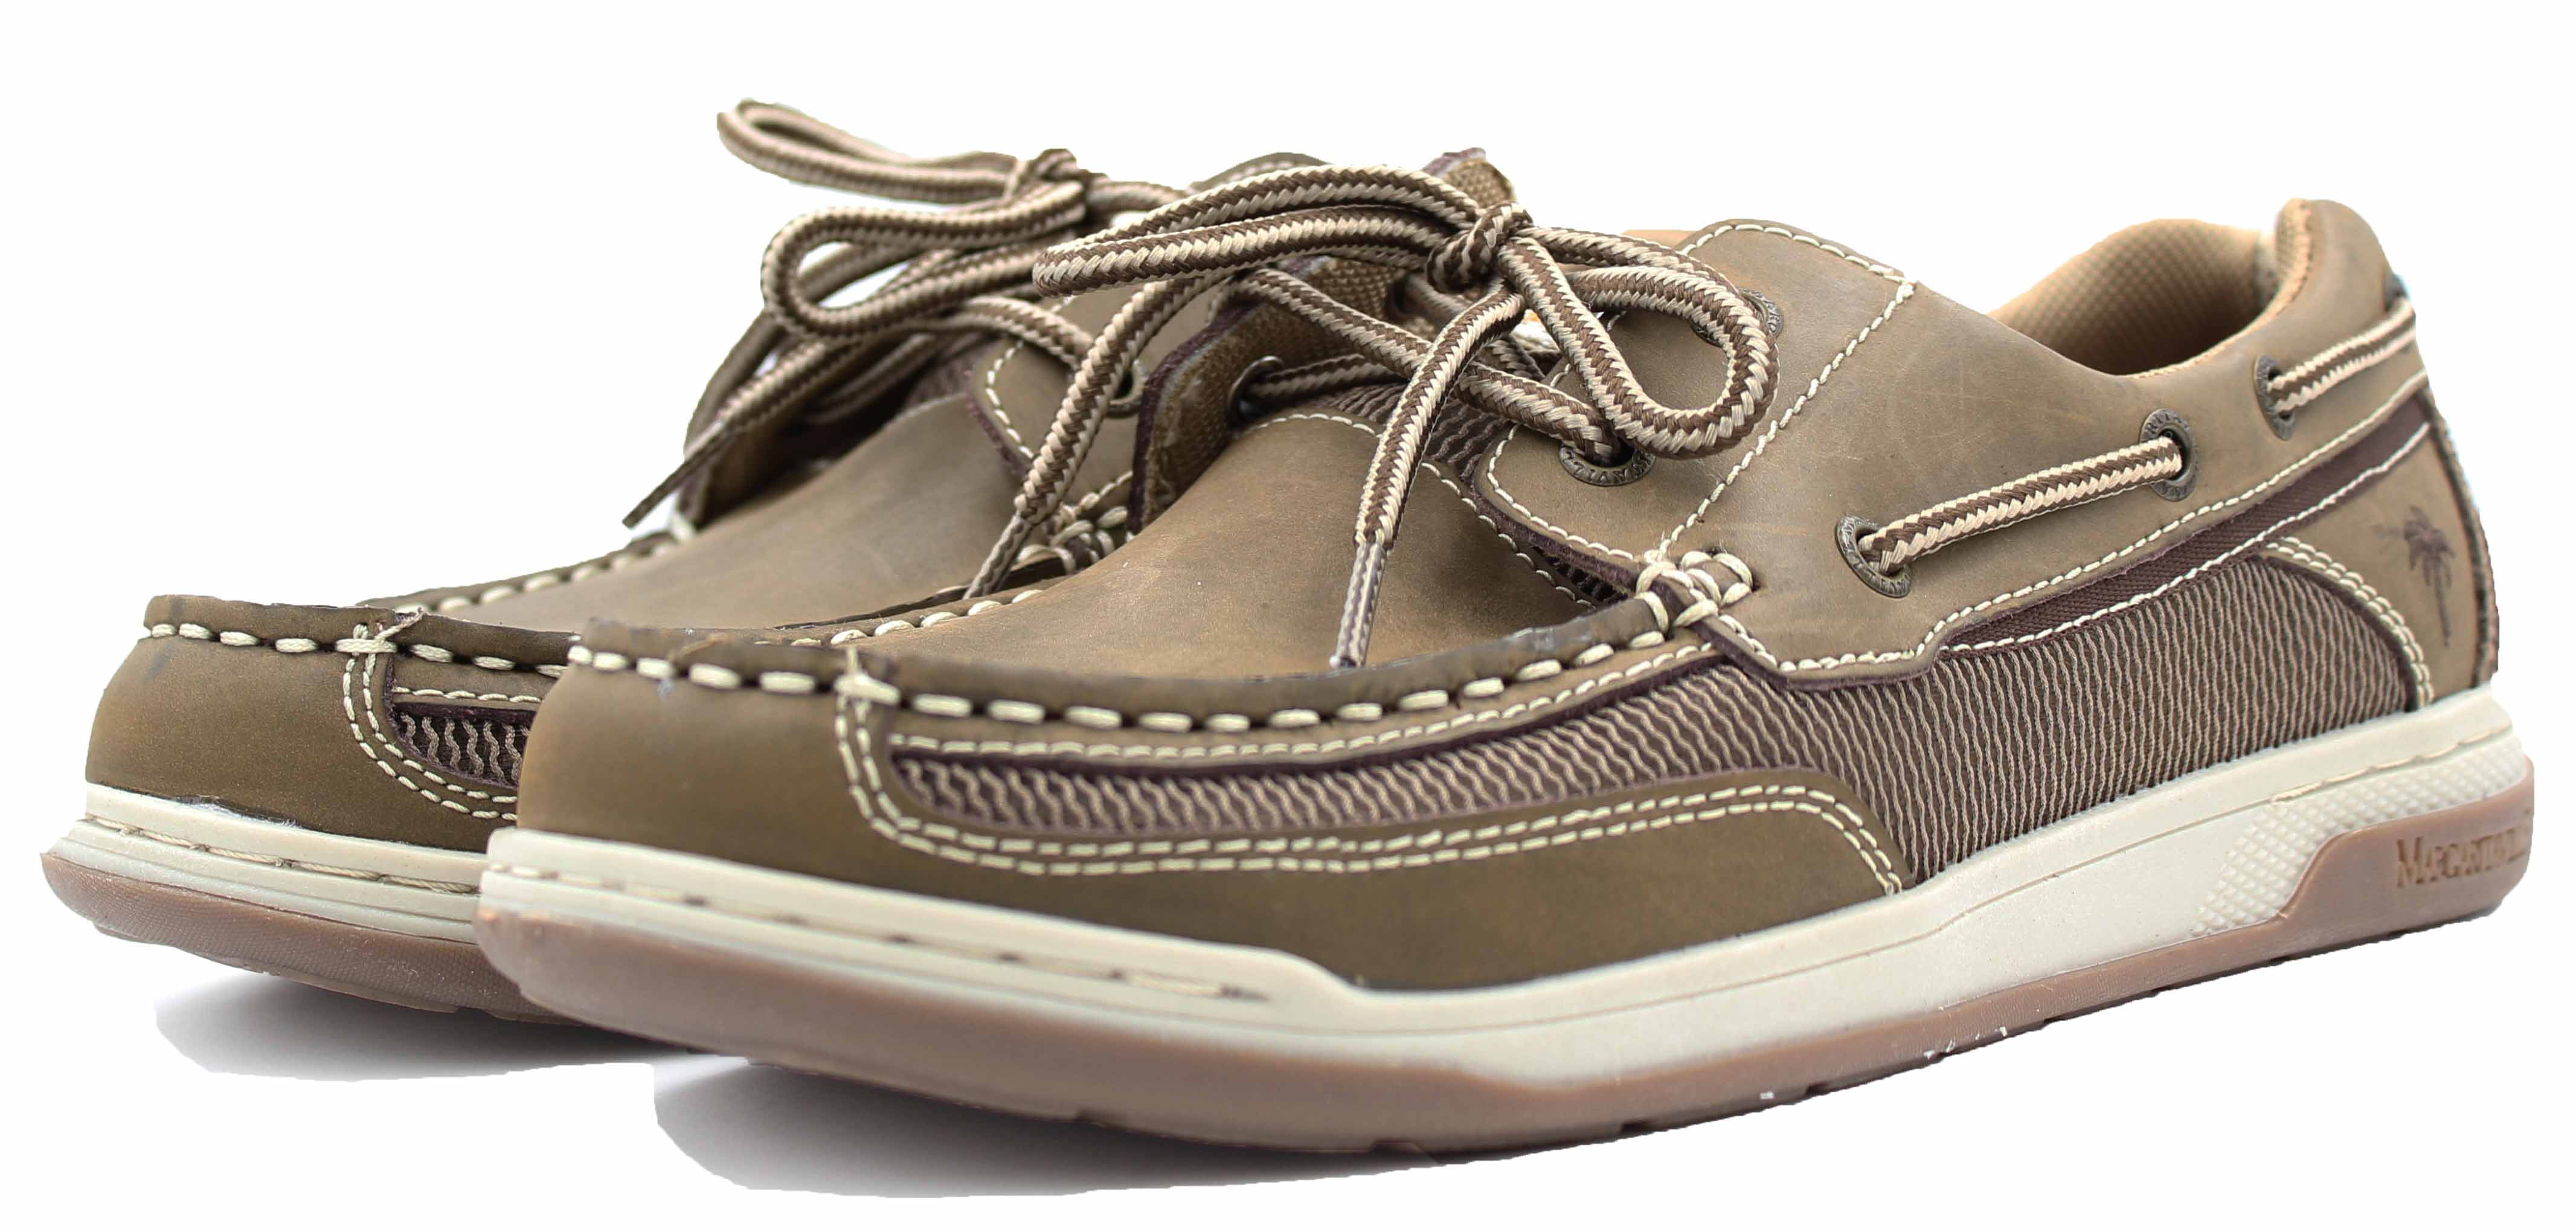 Not branded - Margaritaville Mens Comfort Insole Boat Shoes (Palm, 13